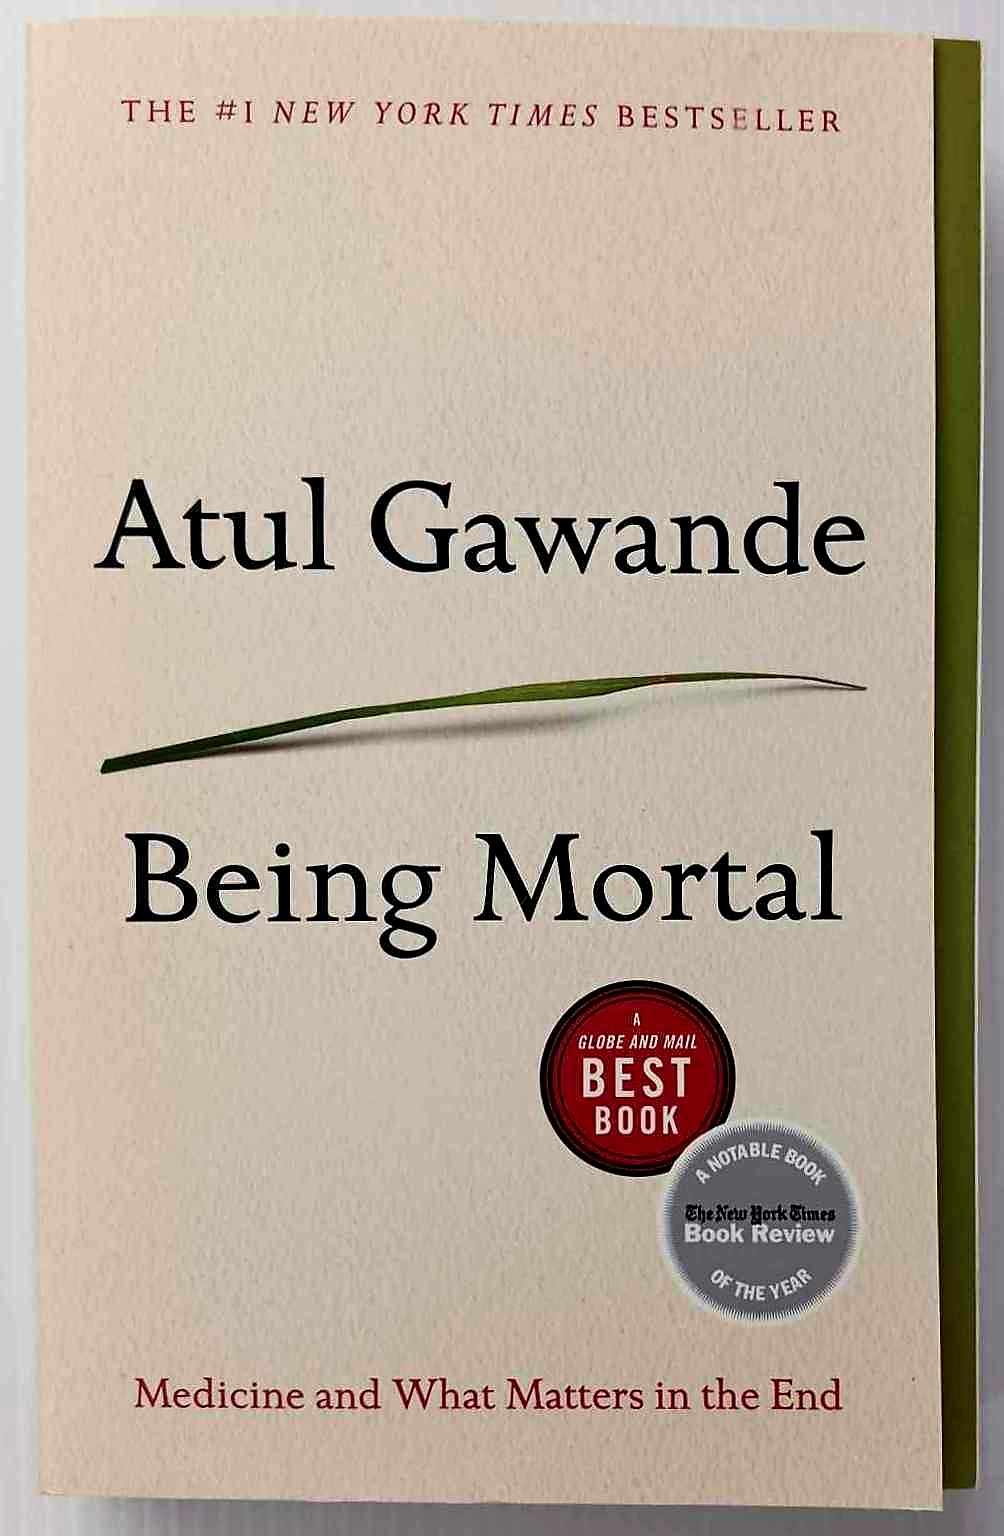 BEING MORTAL - Atul Gawande